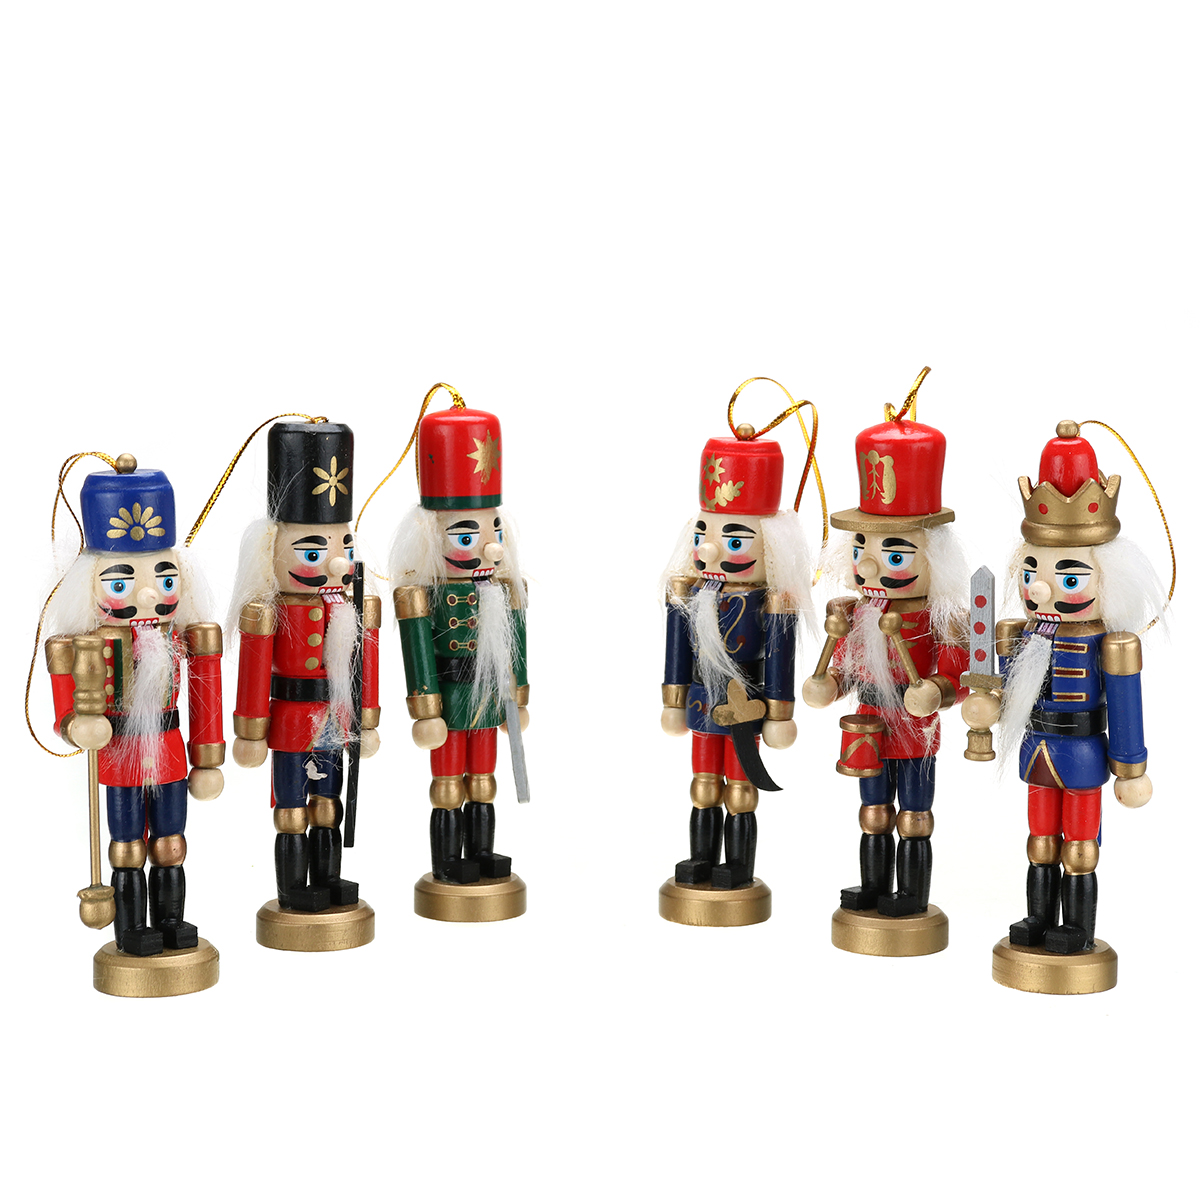 Wooden-Nutcracker-Doll-Soldier-Vintage-Handcraft-Decoration-Christmas-Gifts-1787904-8